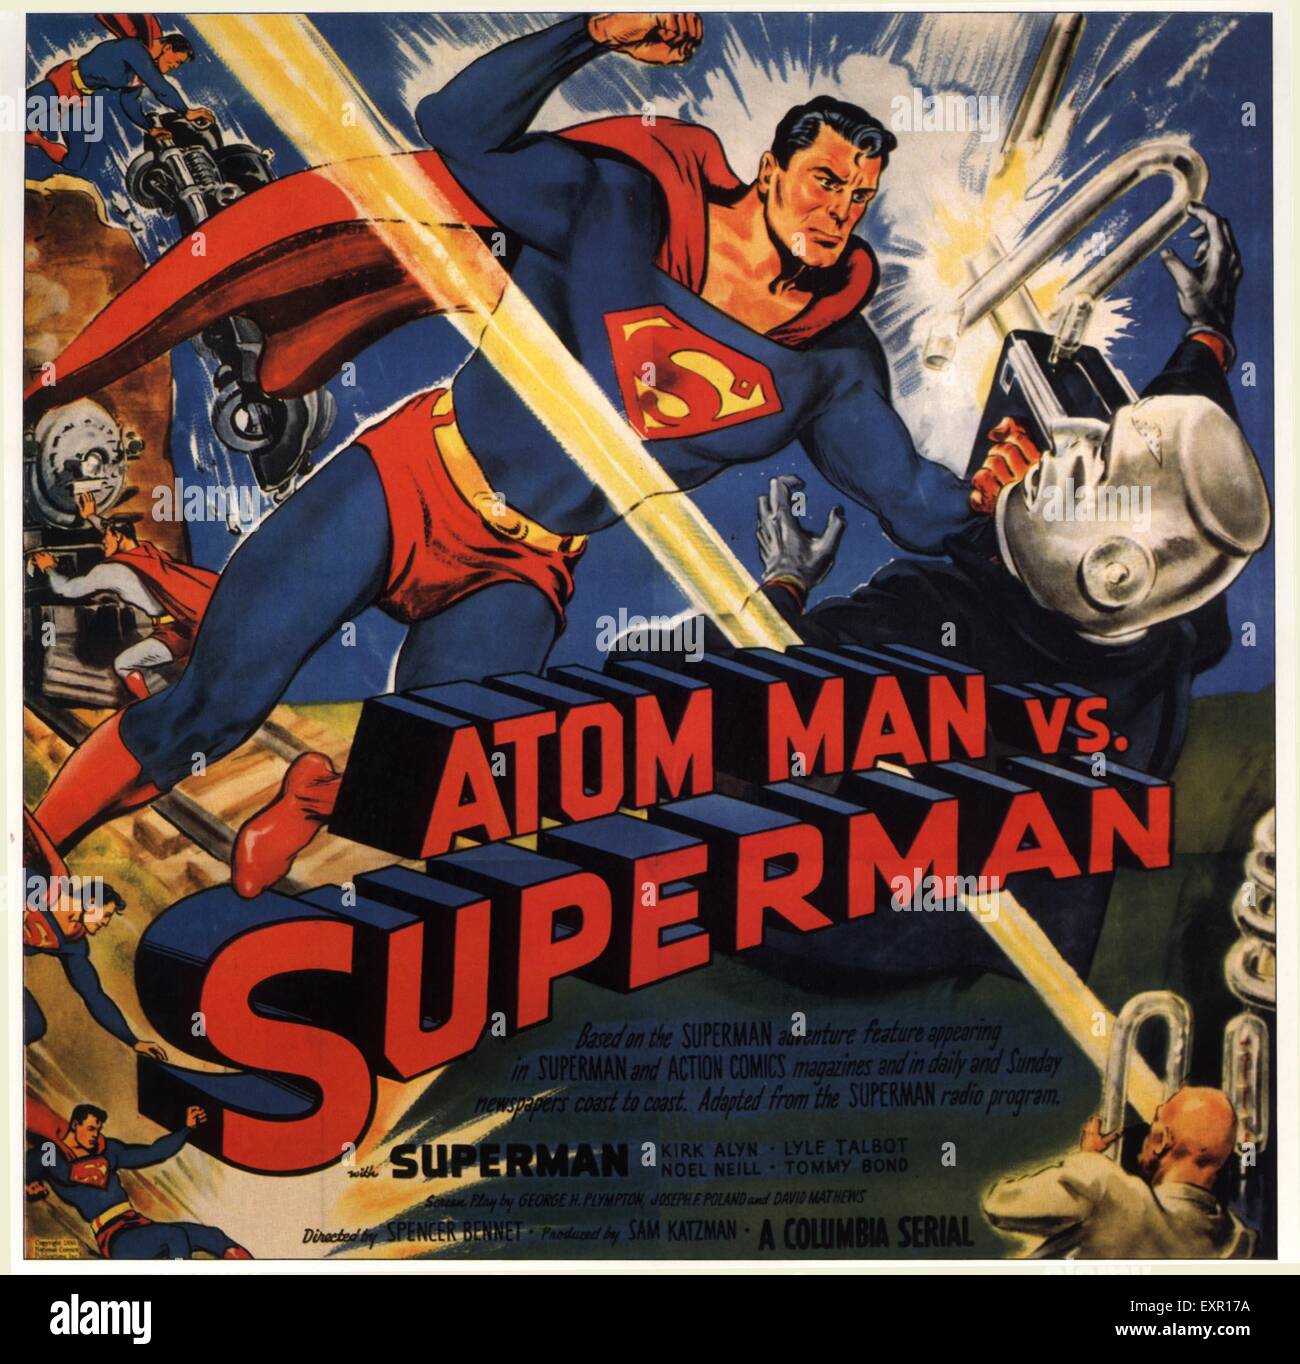 1950s USA Atom Man Vs. Spiderman Film Poster Stock Photo